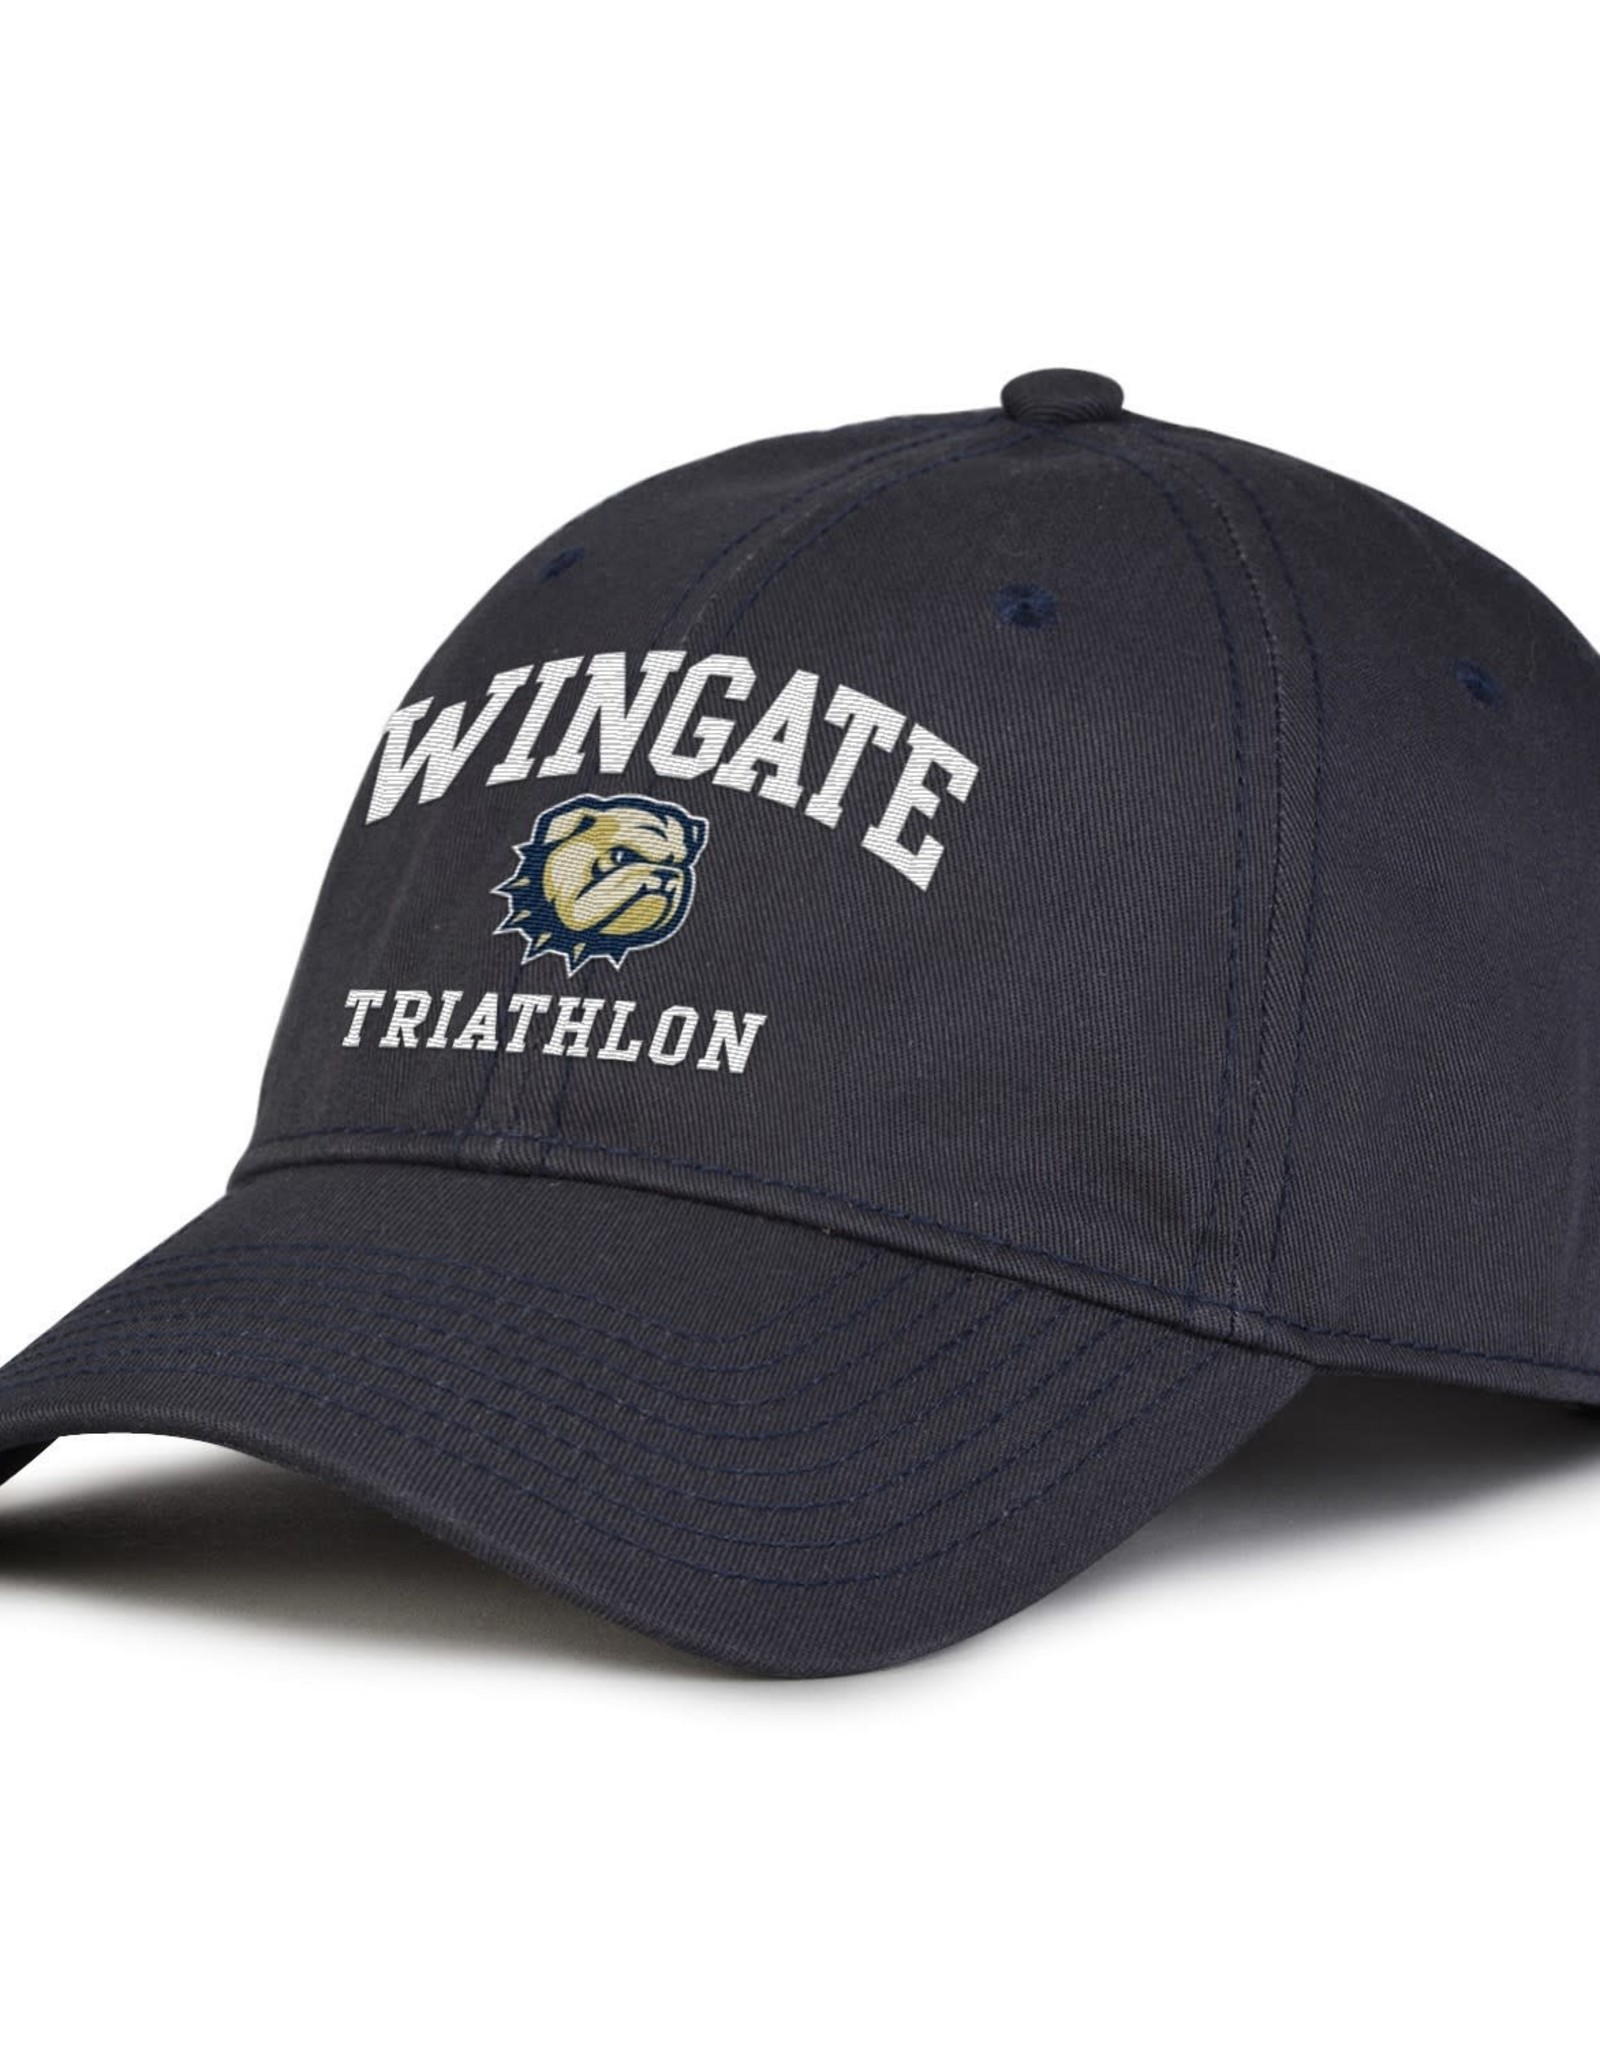 The Game Deep Navy Wingate Dog Head Triathlon Unstructured Adjustable Hat